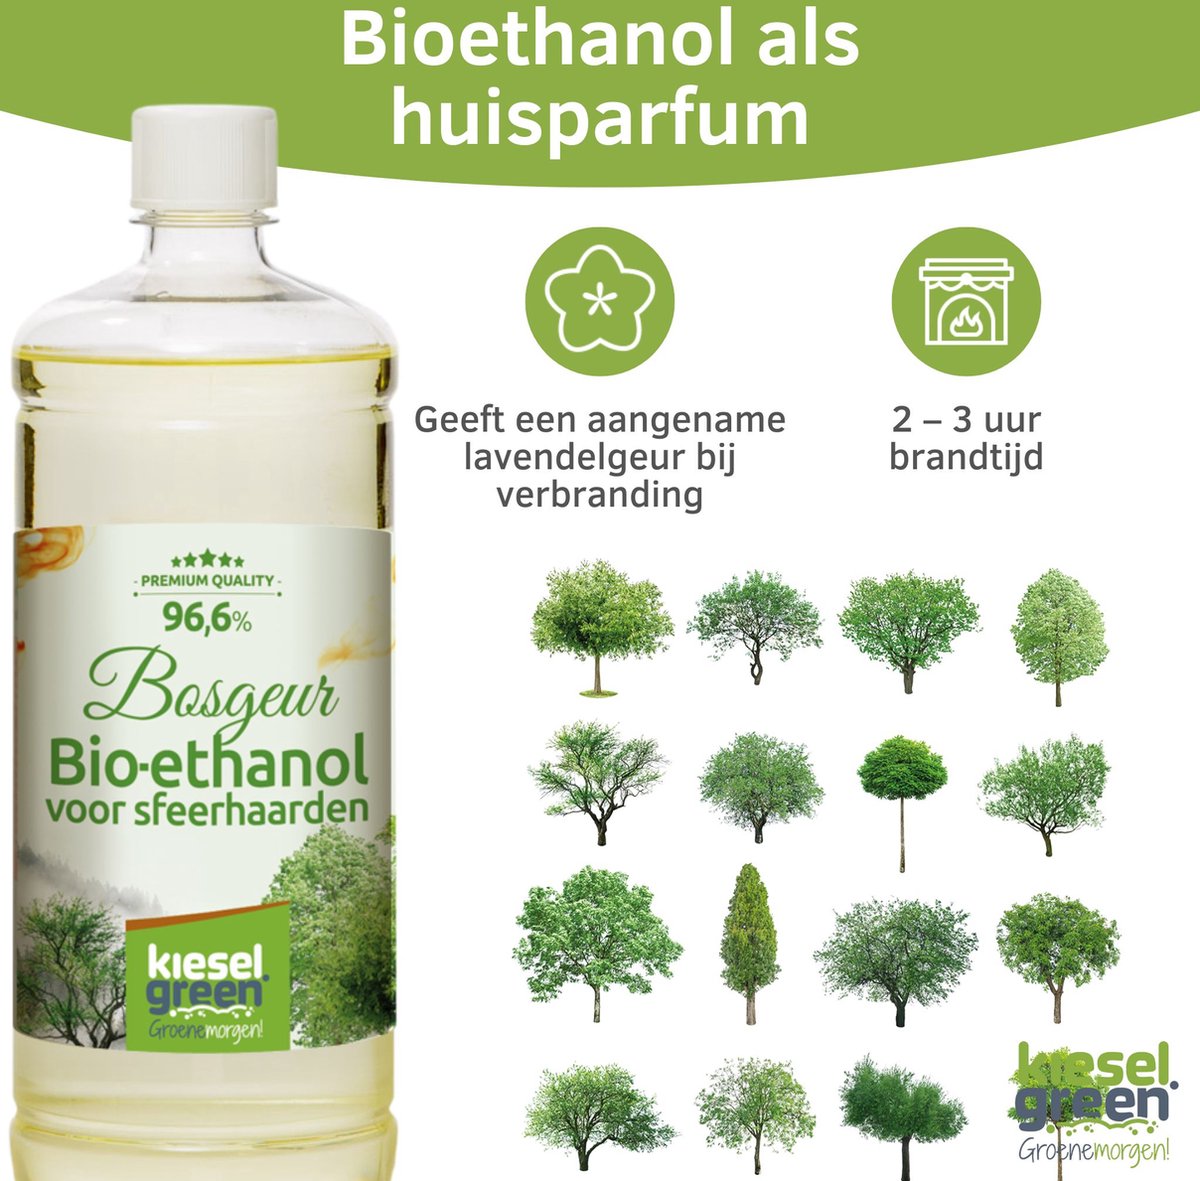 KieselGreen Bioethanol 6 Litre bioéthanol 96.6% biocarburant en